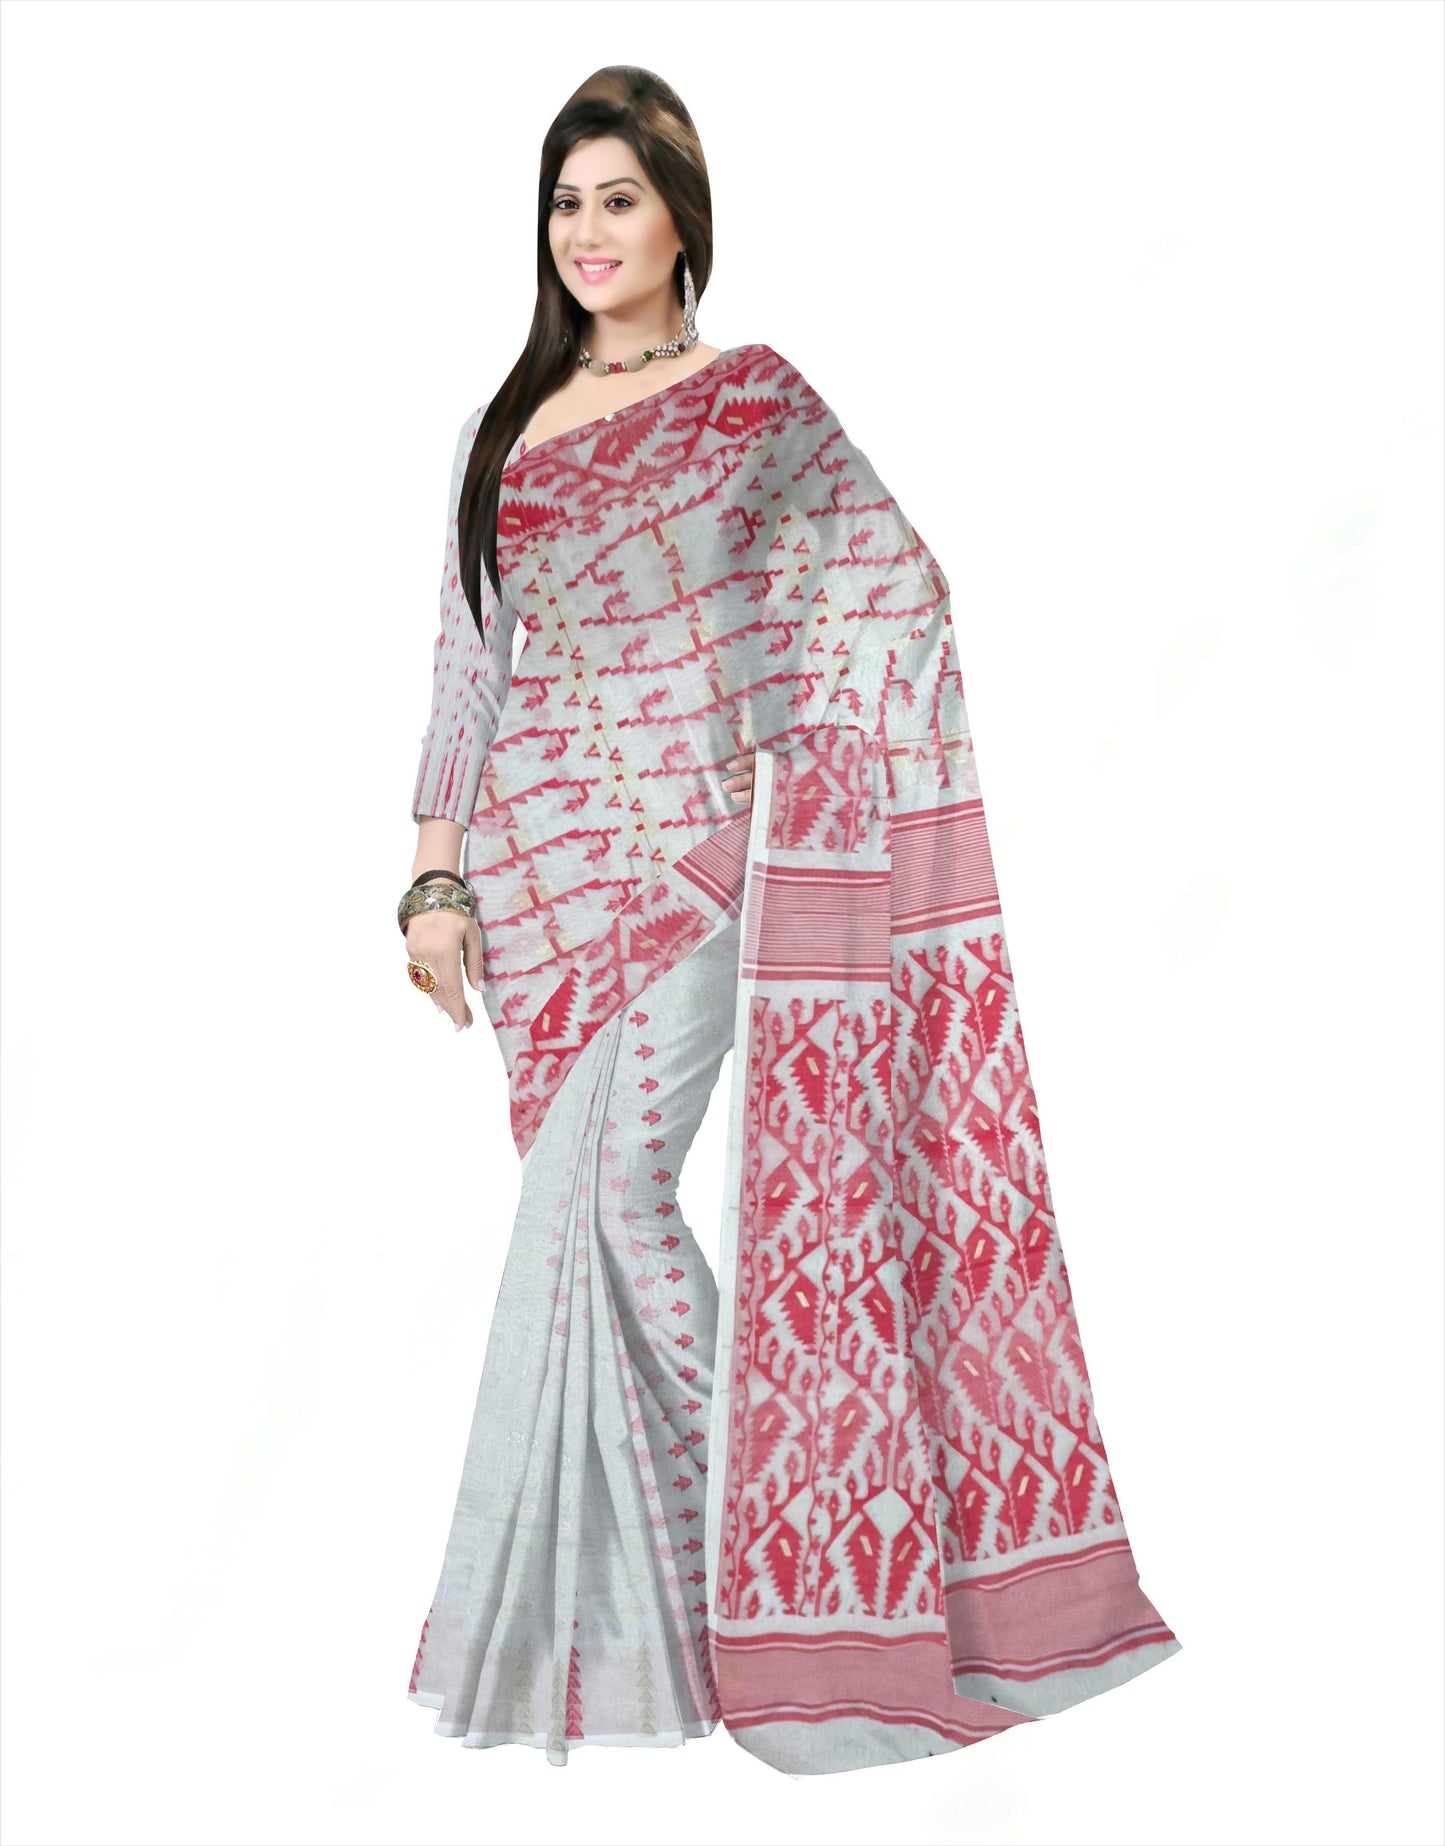 Pradip Fabrics Ethnic Women's Cotton Tant Gap Jamdani Red & white Color Saree